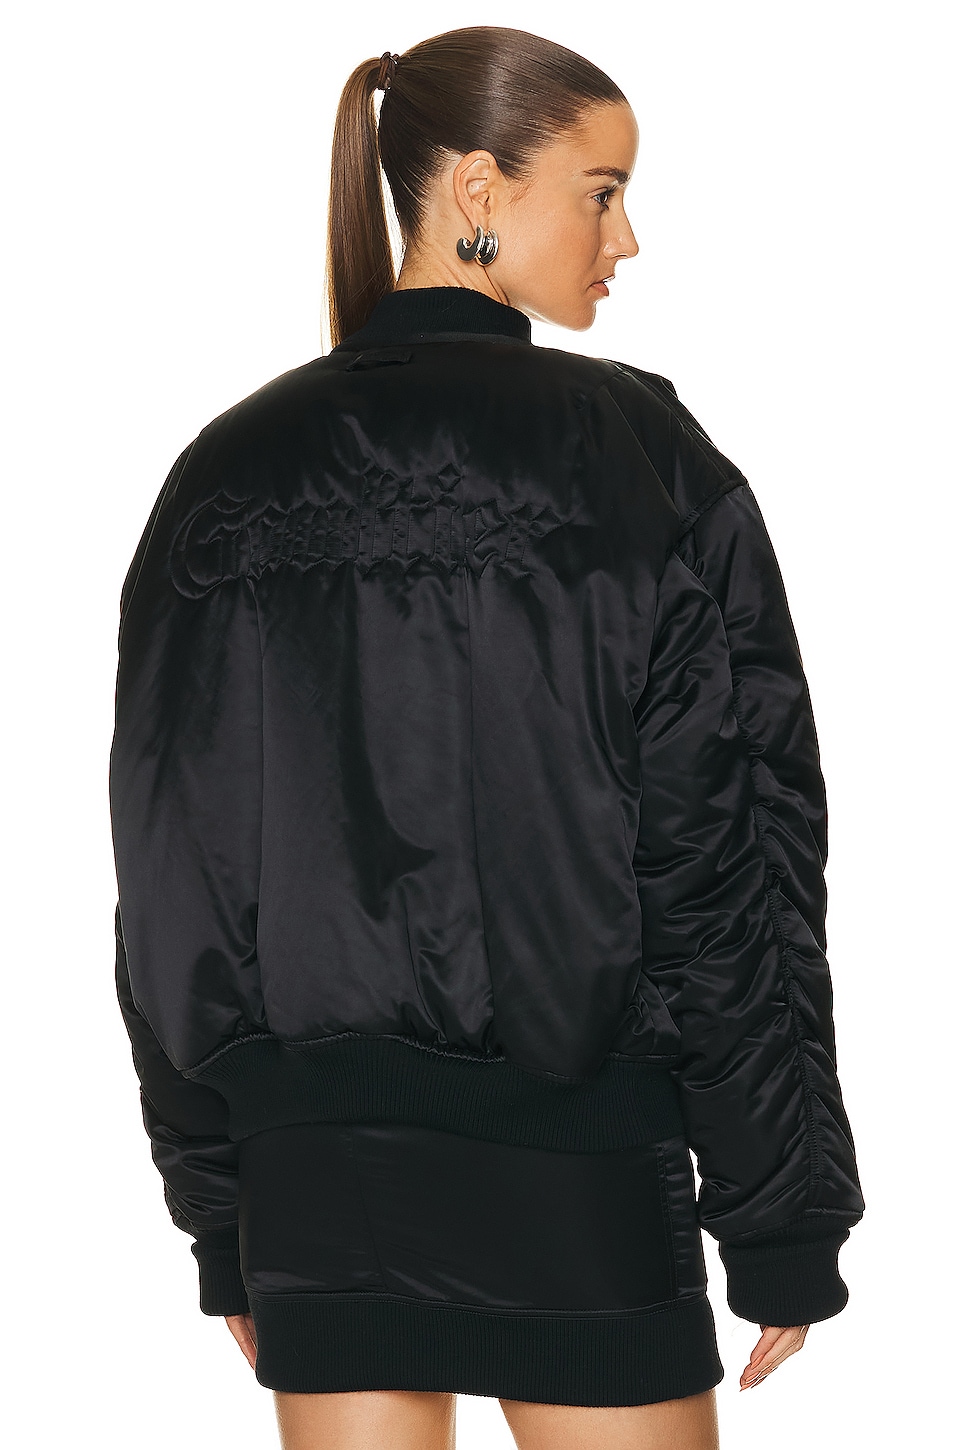 Куртка Jean Paul Gaultier Embroidered Oversize Bomber, черный куртка jean paul gaultier embroidered oversize bomber черный